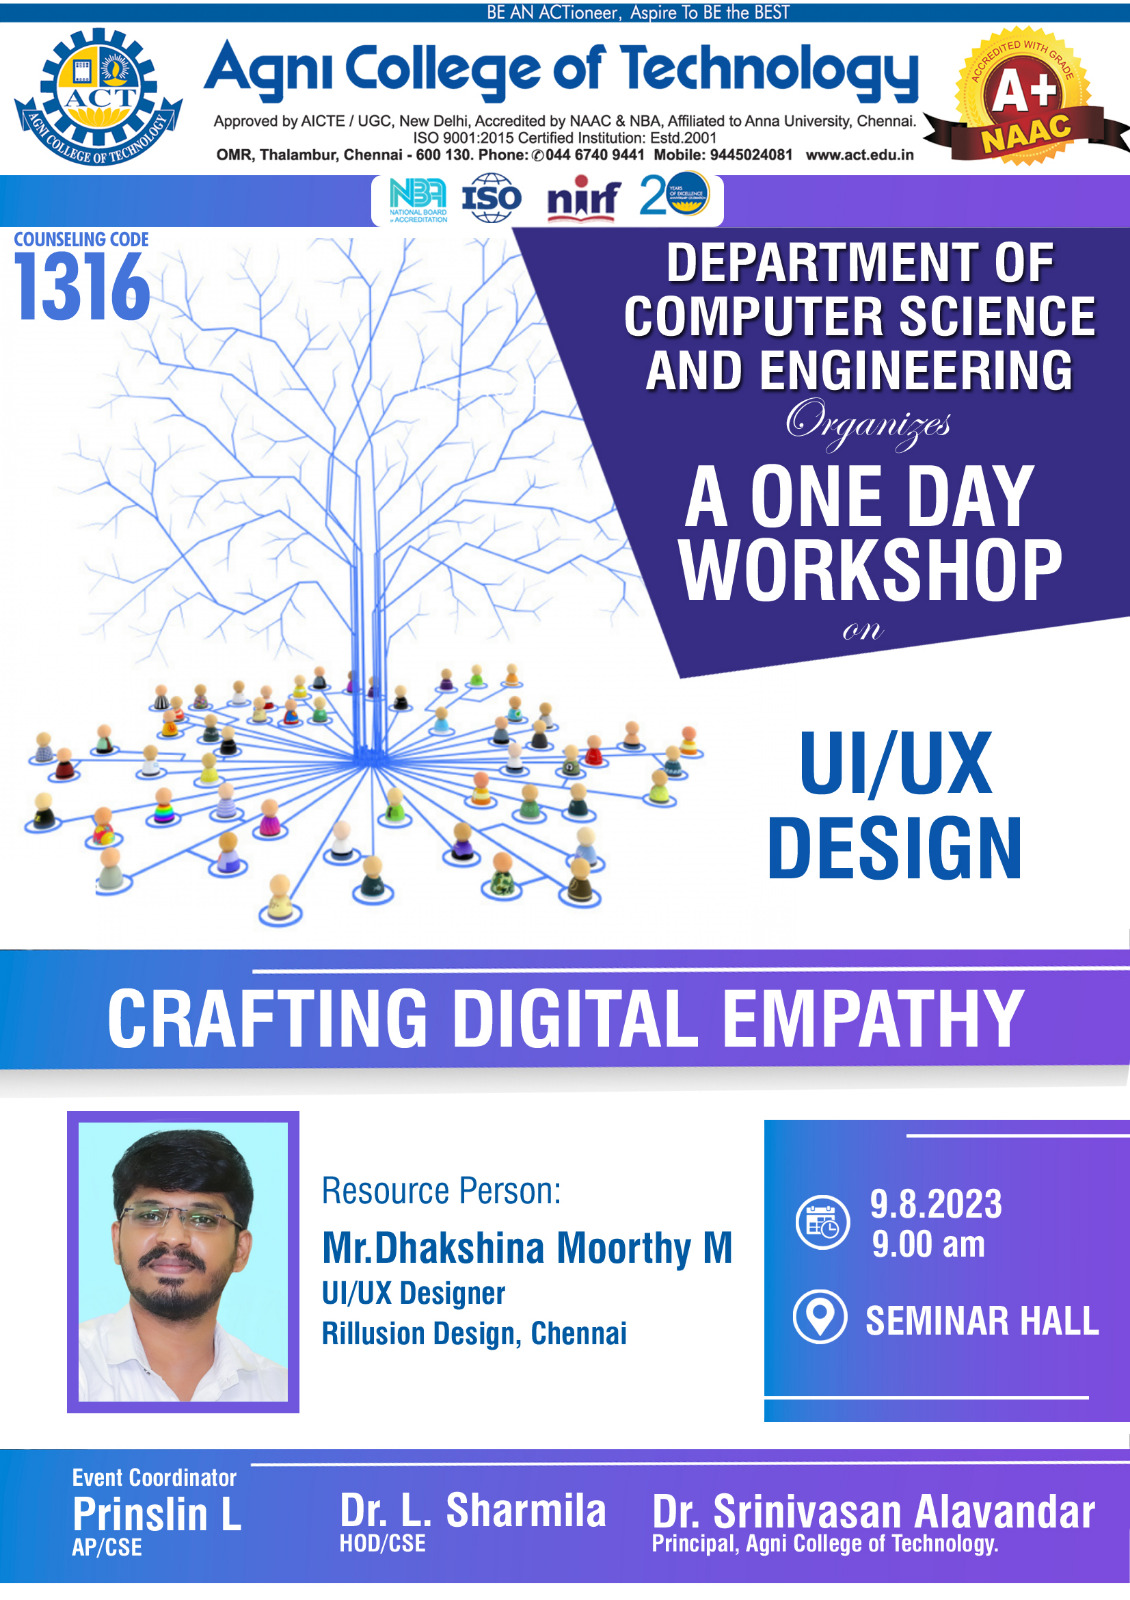 A One Day Workshop on UI/UX Design